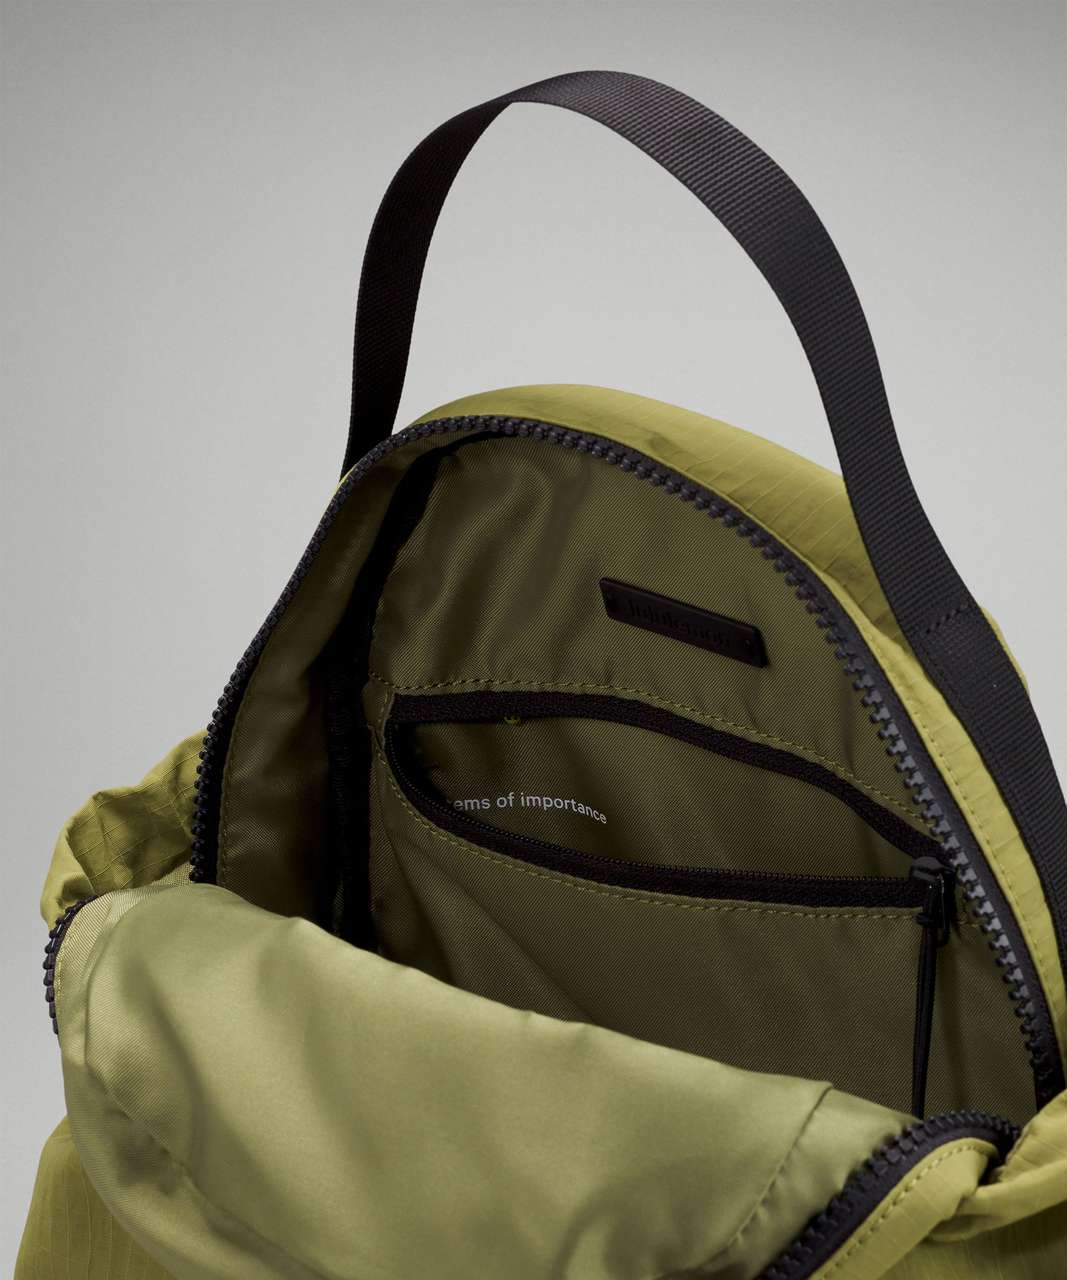 Lululemon Pack and Go Multi Wear Bag - Bronze Green / Black